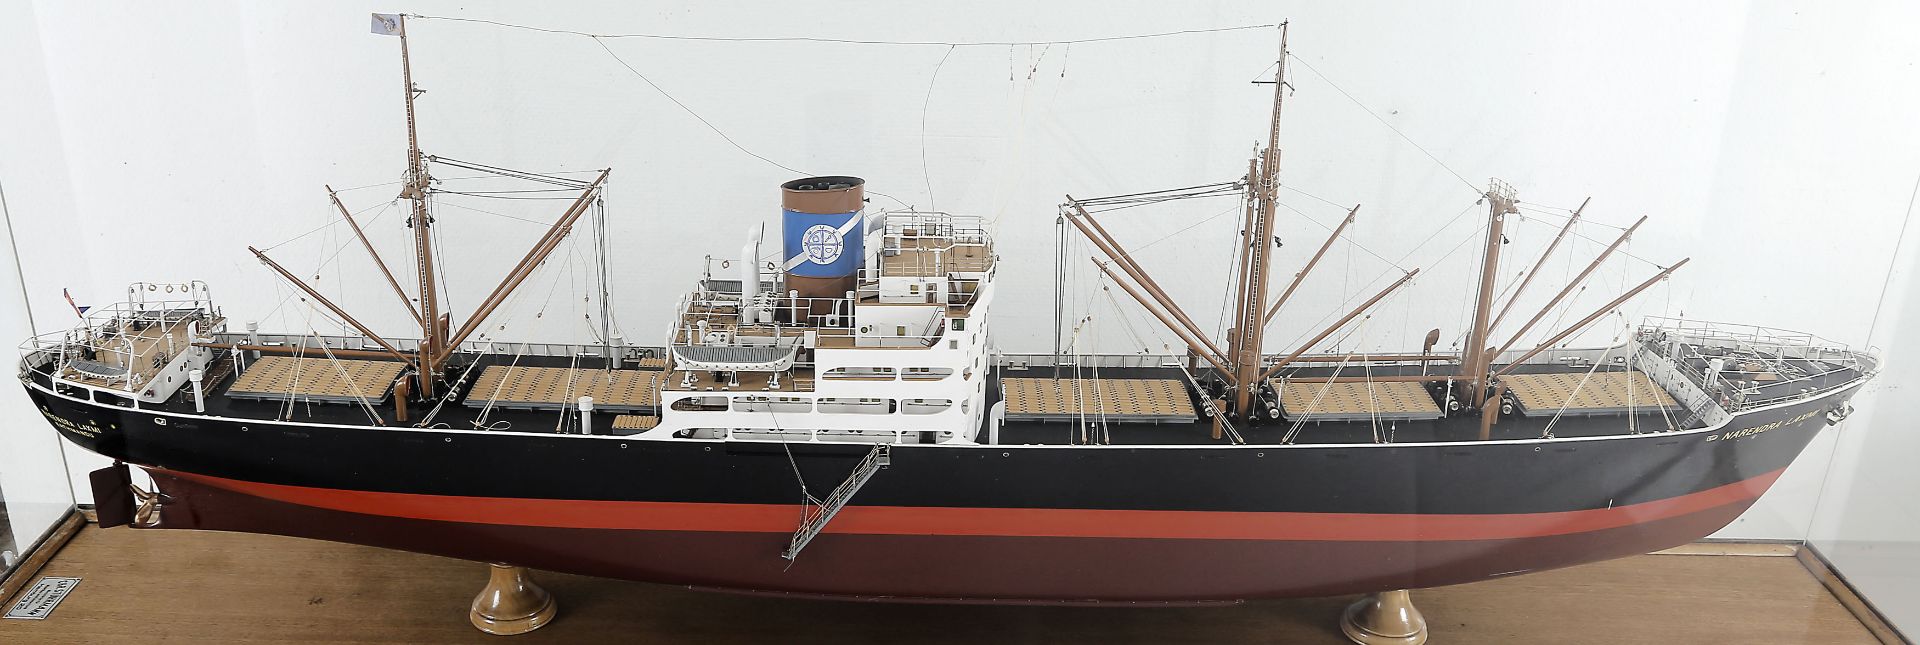 Schiffsmodell M.V. 'Narendra Laxmi', Maßstab 1:100, Chr. Stührmann, Hamburg, um 1950